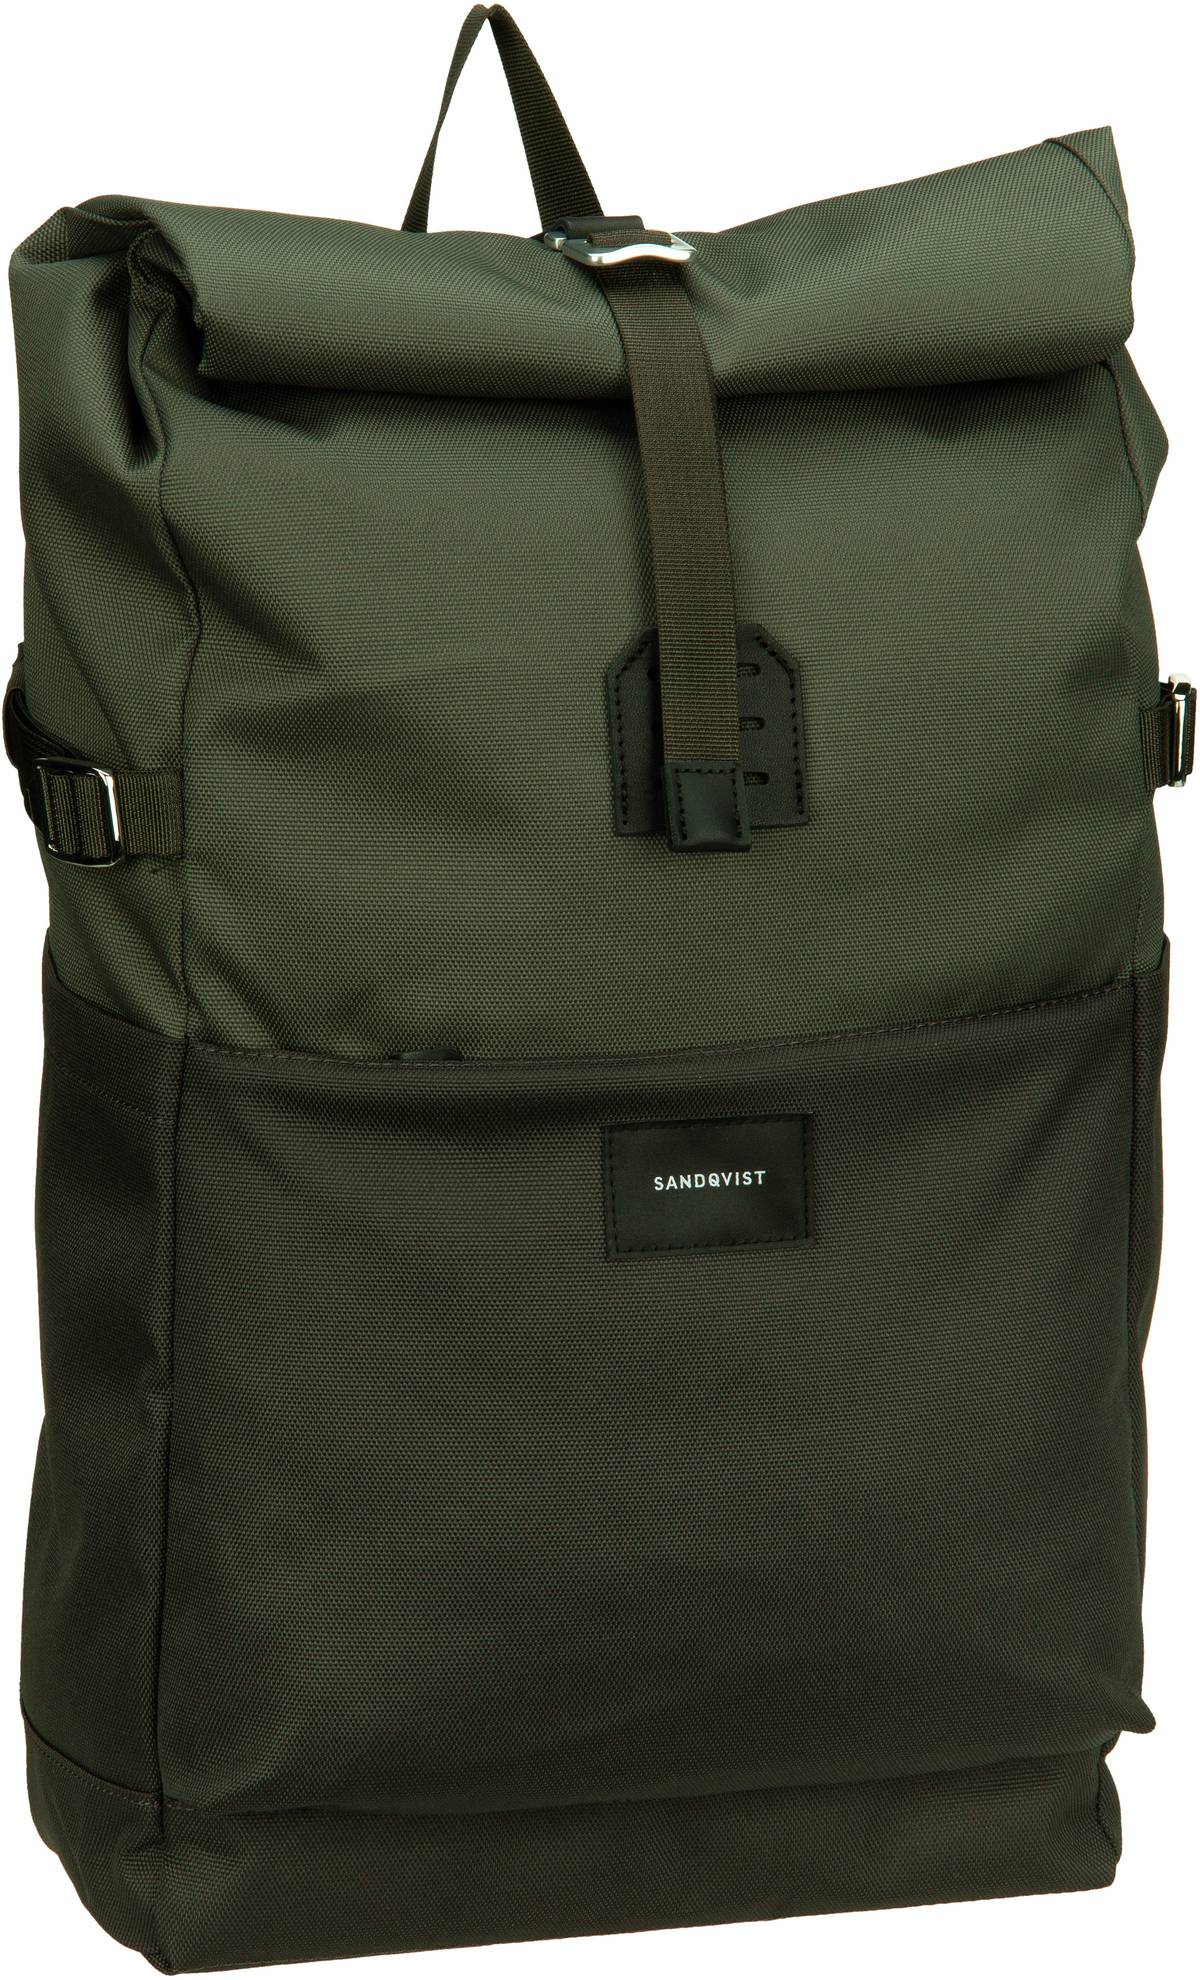 Sandqvist Ilon Rolltop Backpack - Multi Green/Black Leather